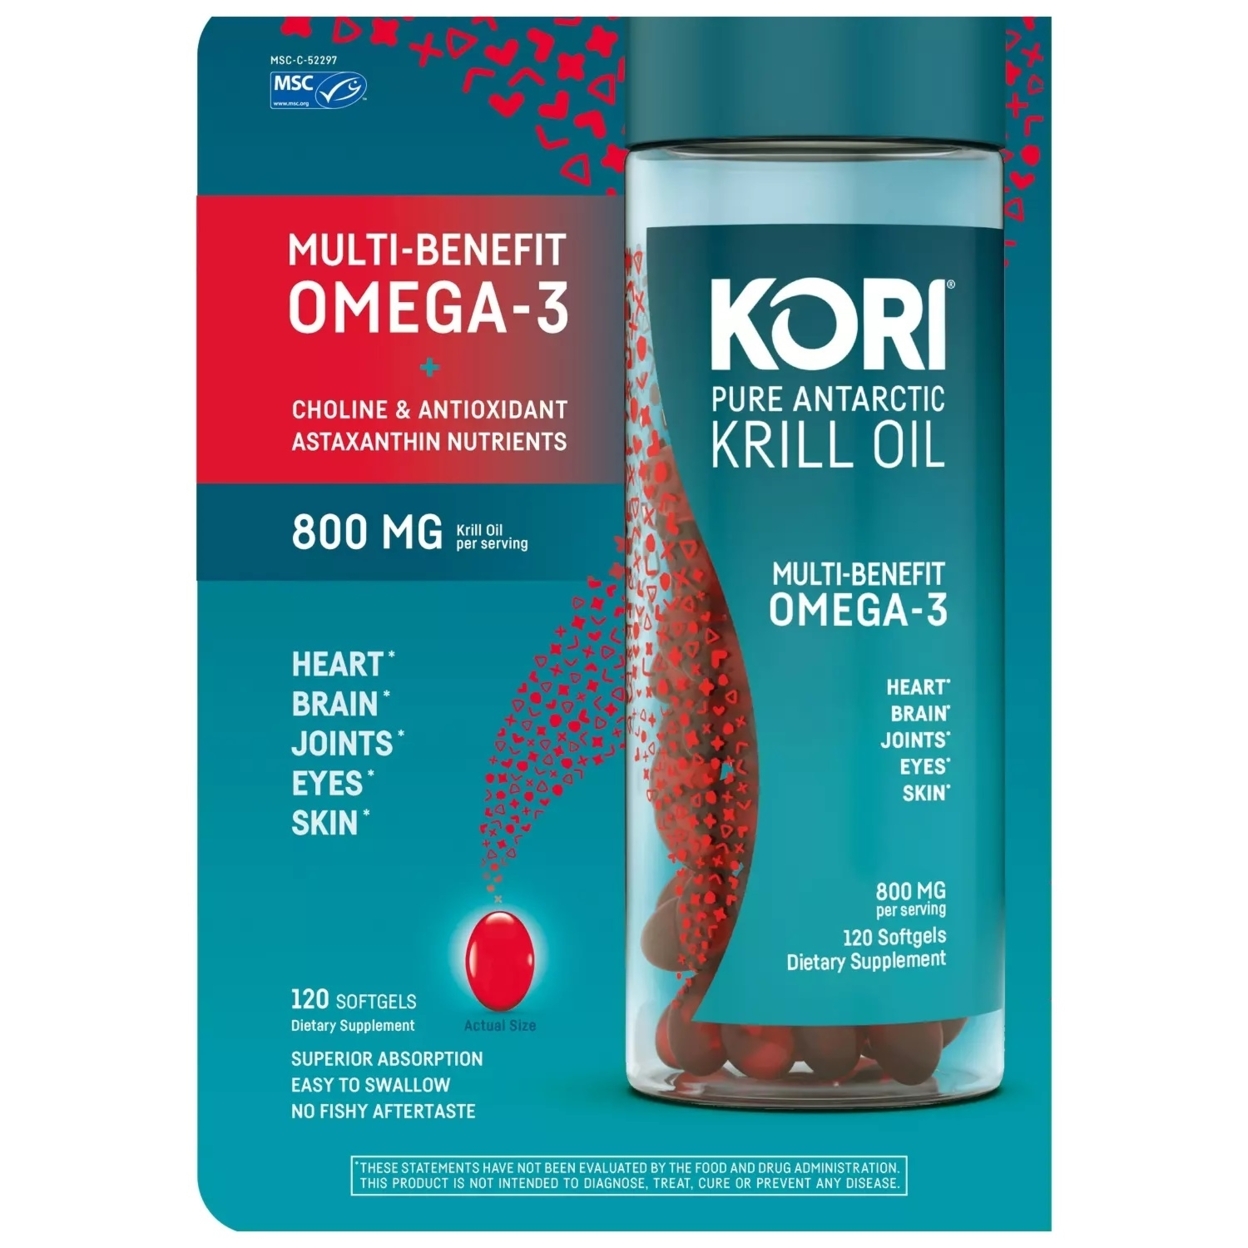 Kori Pure Antarctic Krill Oil Multi-Benefit Omega-3 800 Mg. (120 Count)